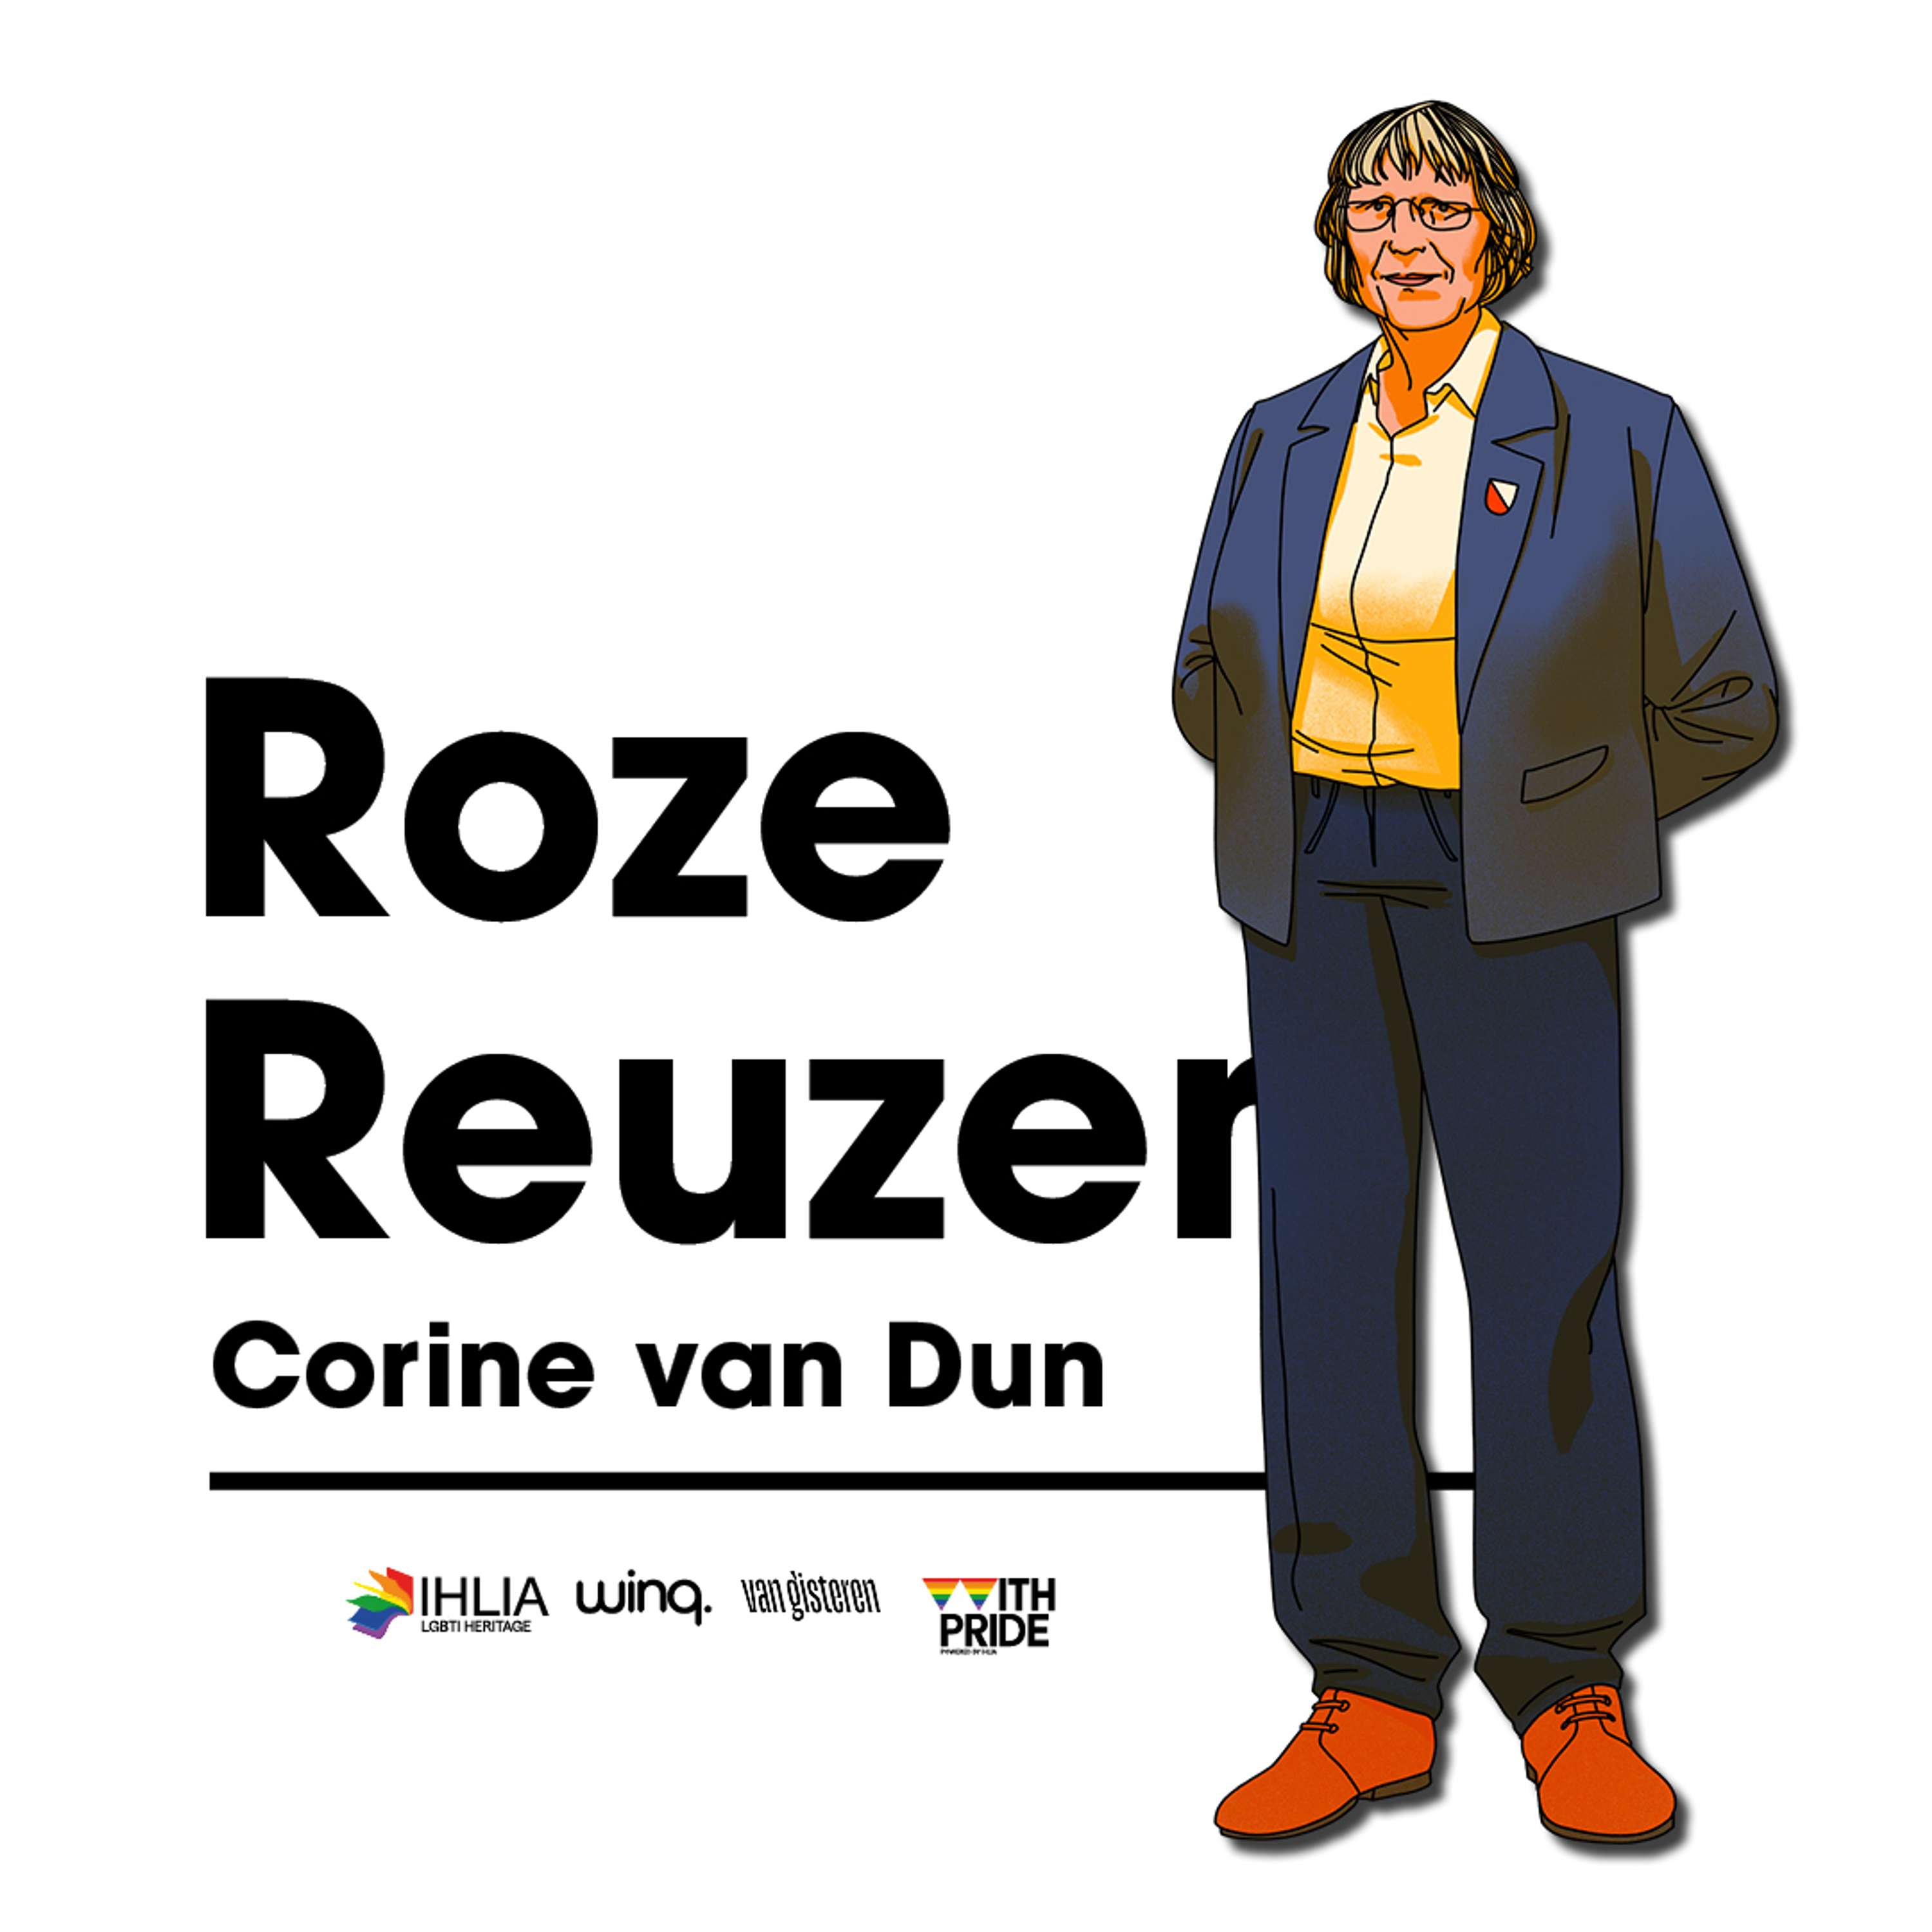 Corine van Dun